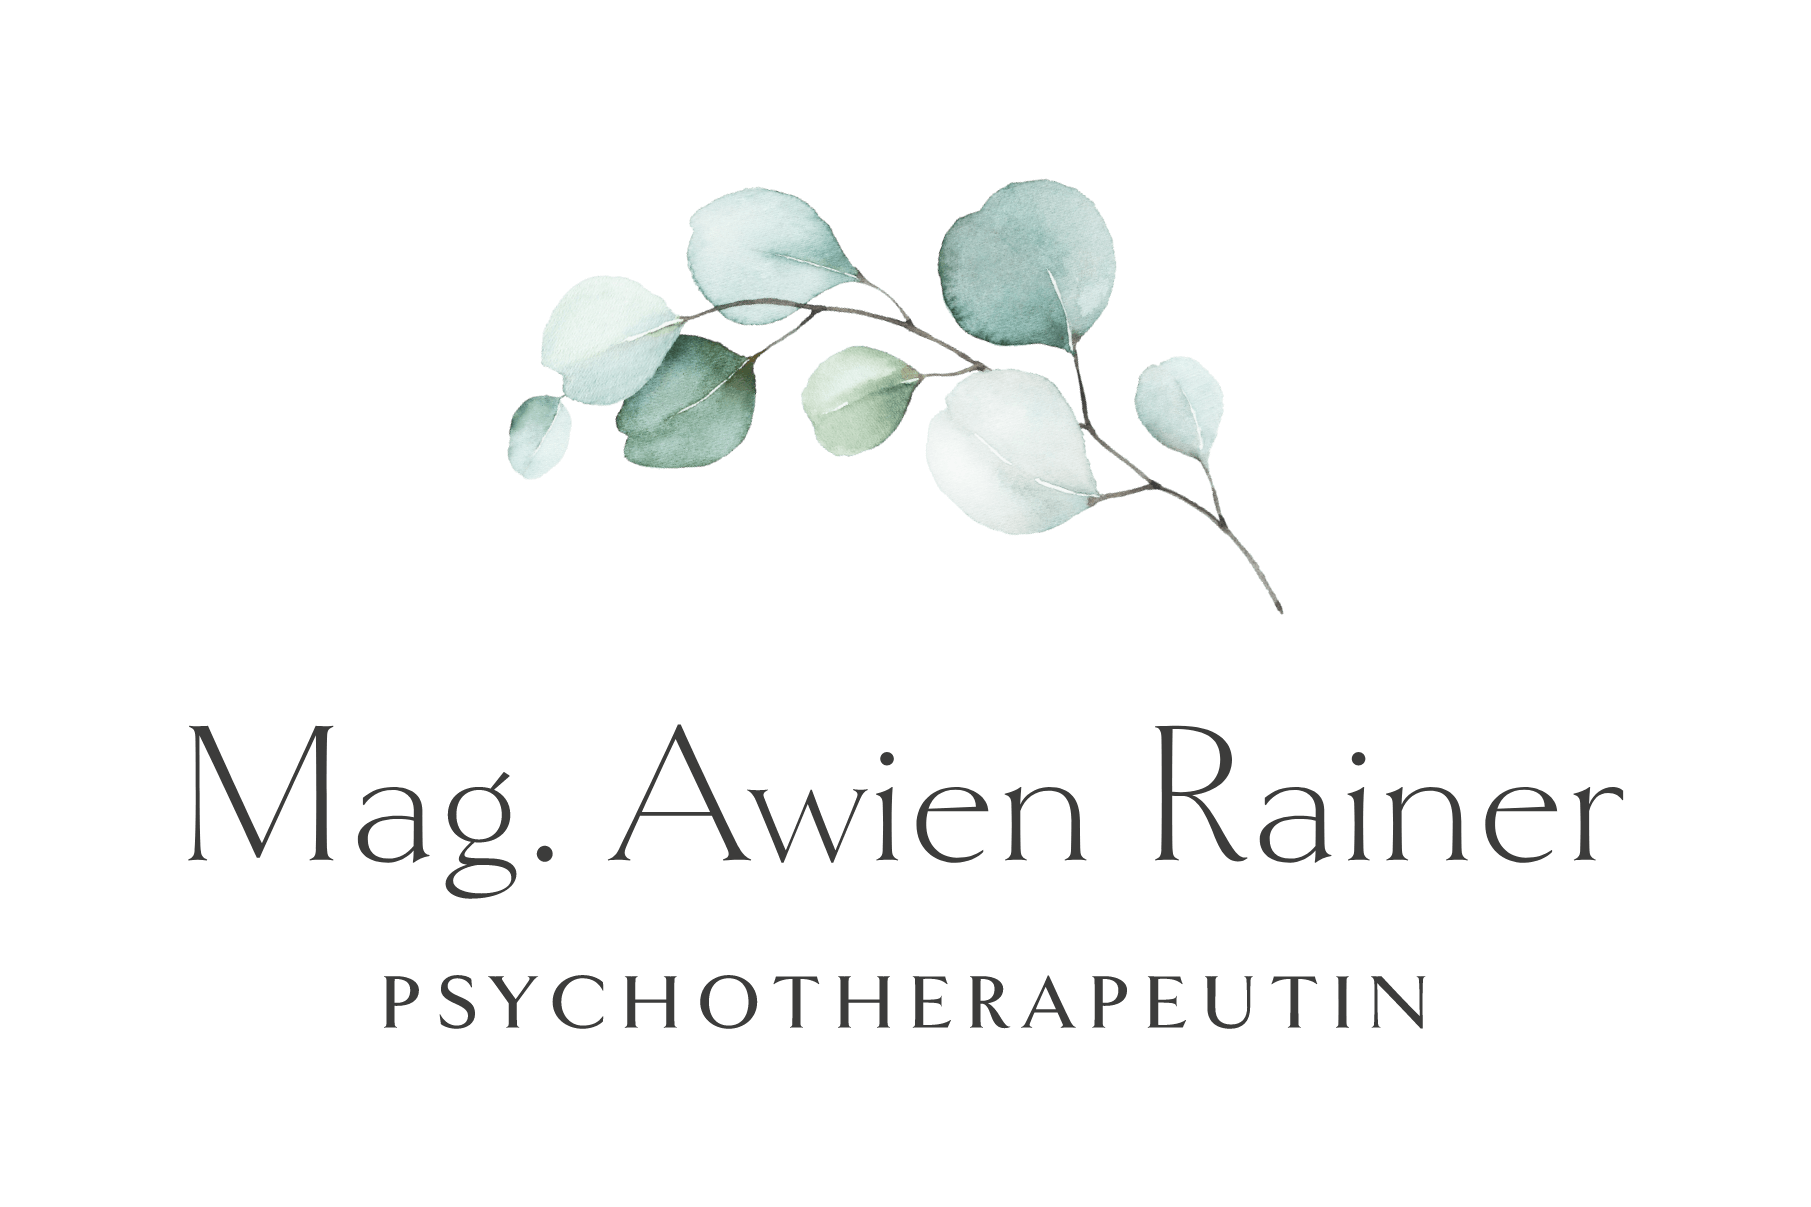 Mag. Awien Rainer - Psychotherapeutin